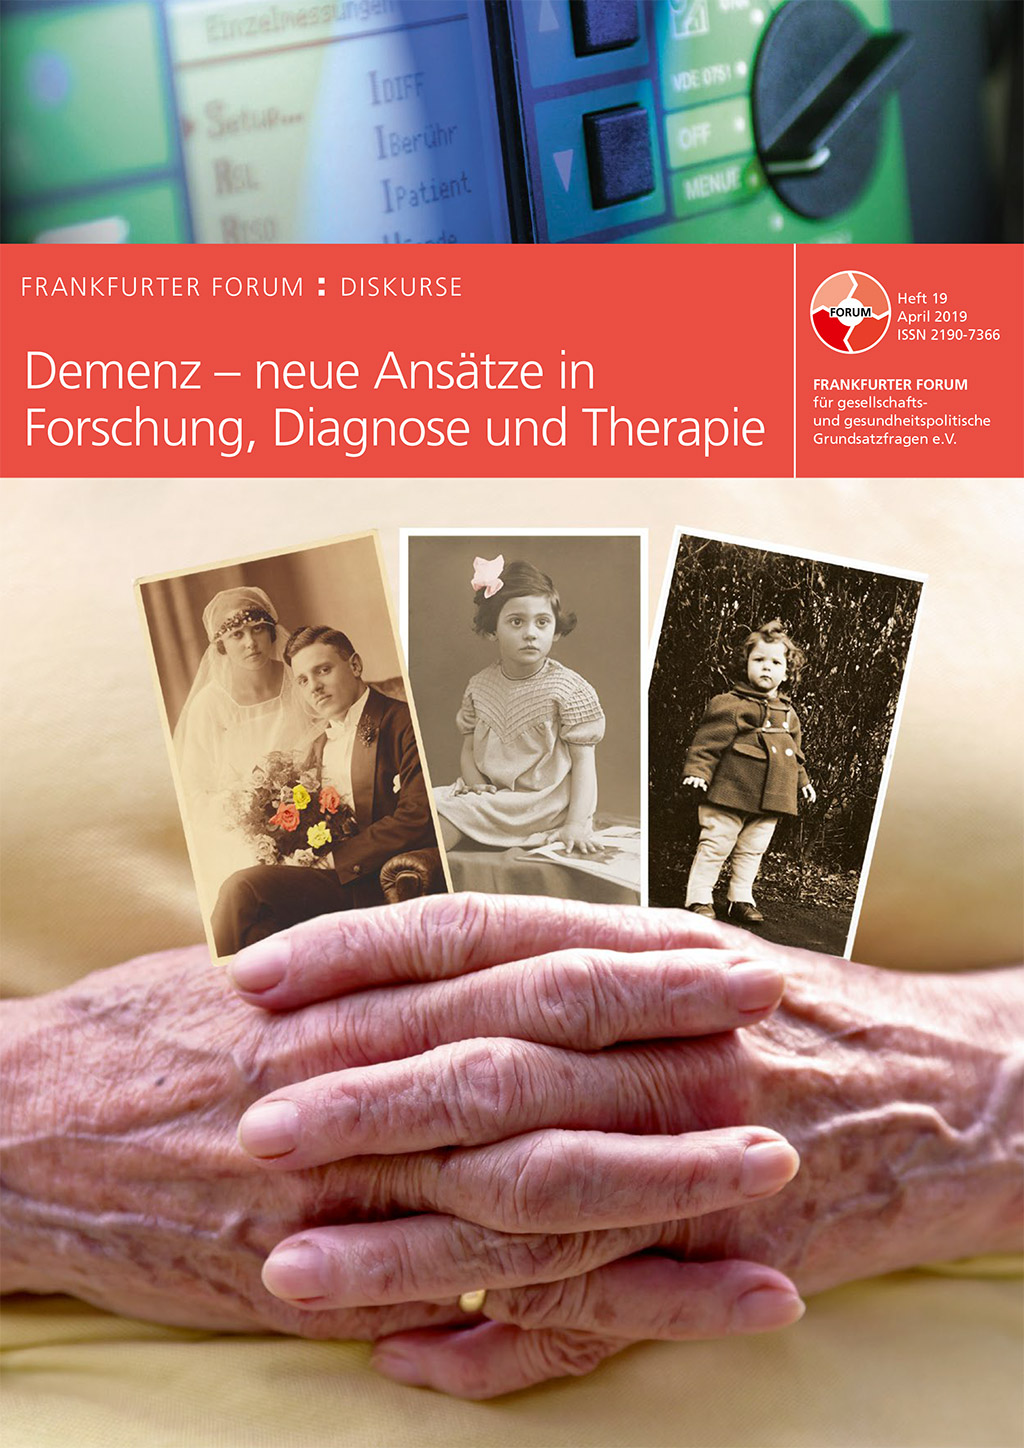 frankfurter-forum-heft-19-cover